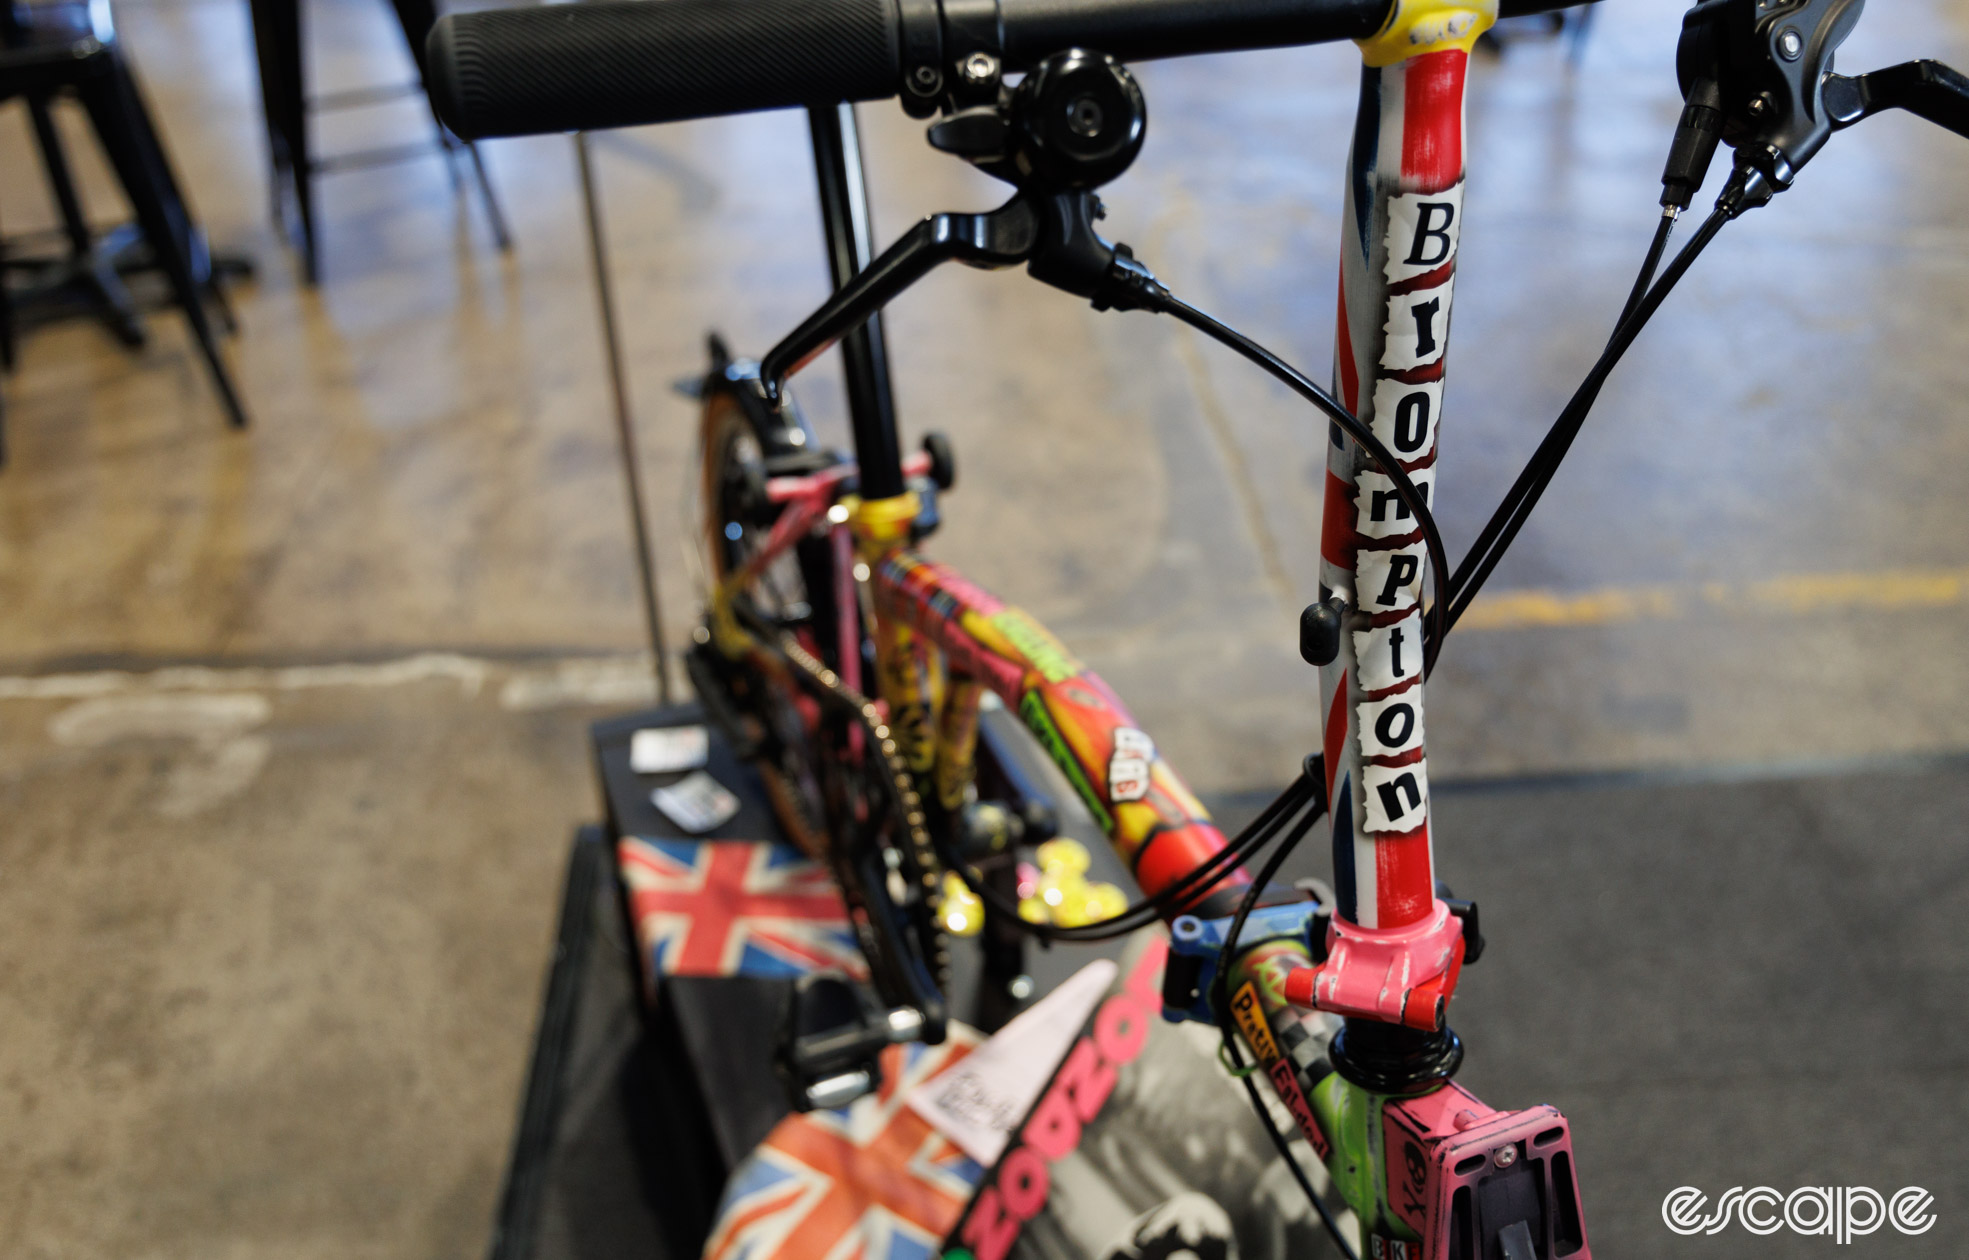 Custom painted Brompton folding bike with British punk-rock inspired theme. 